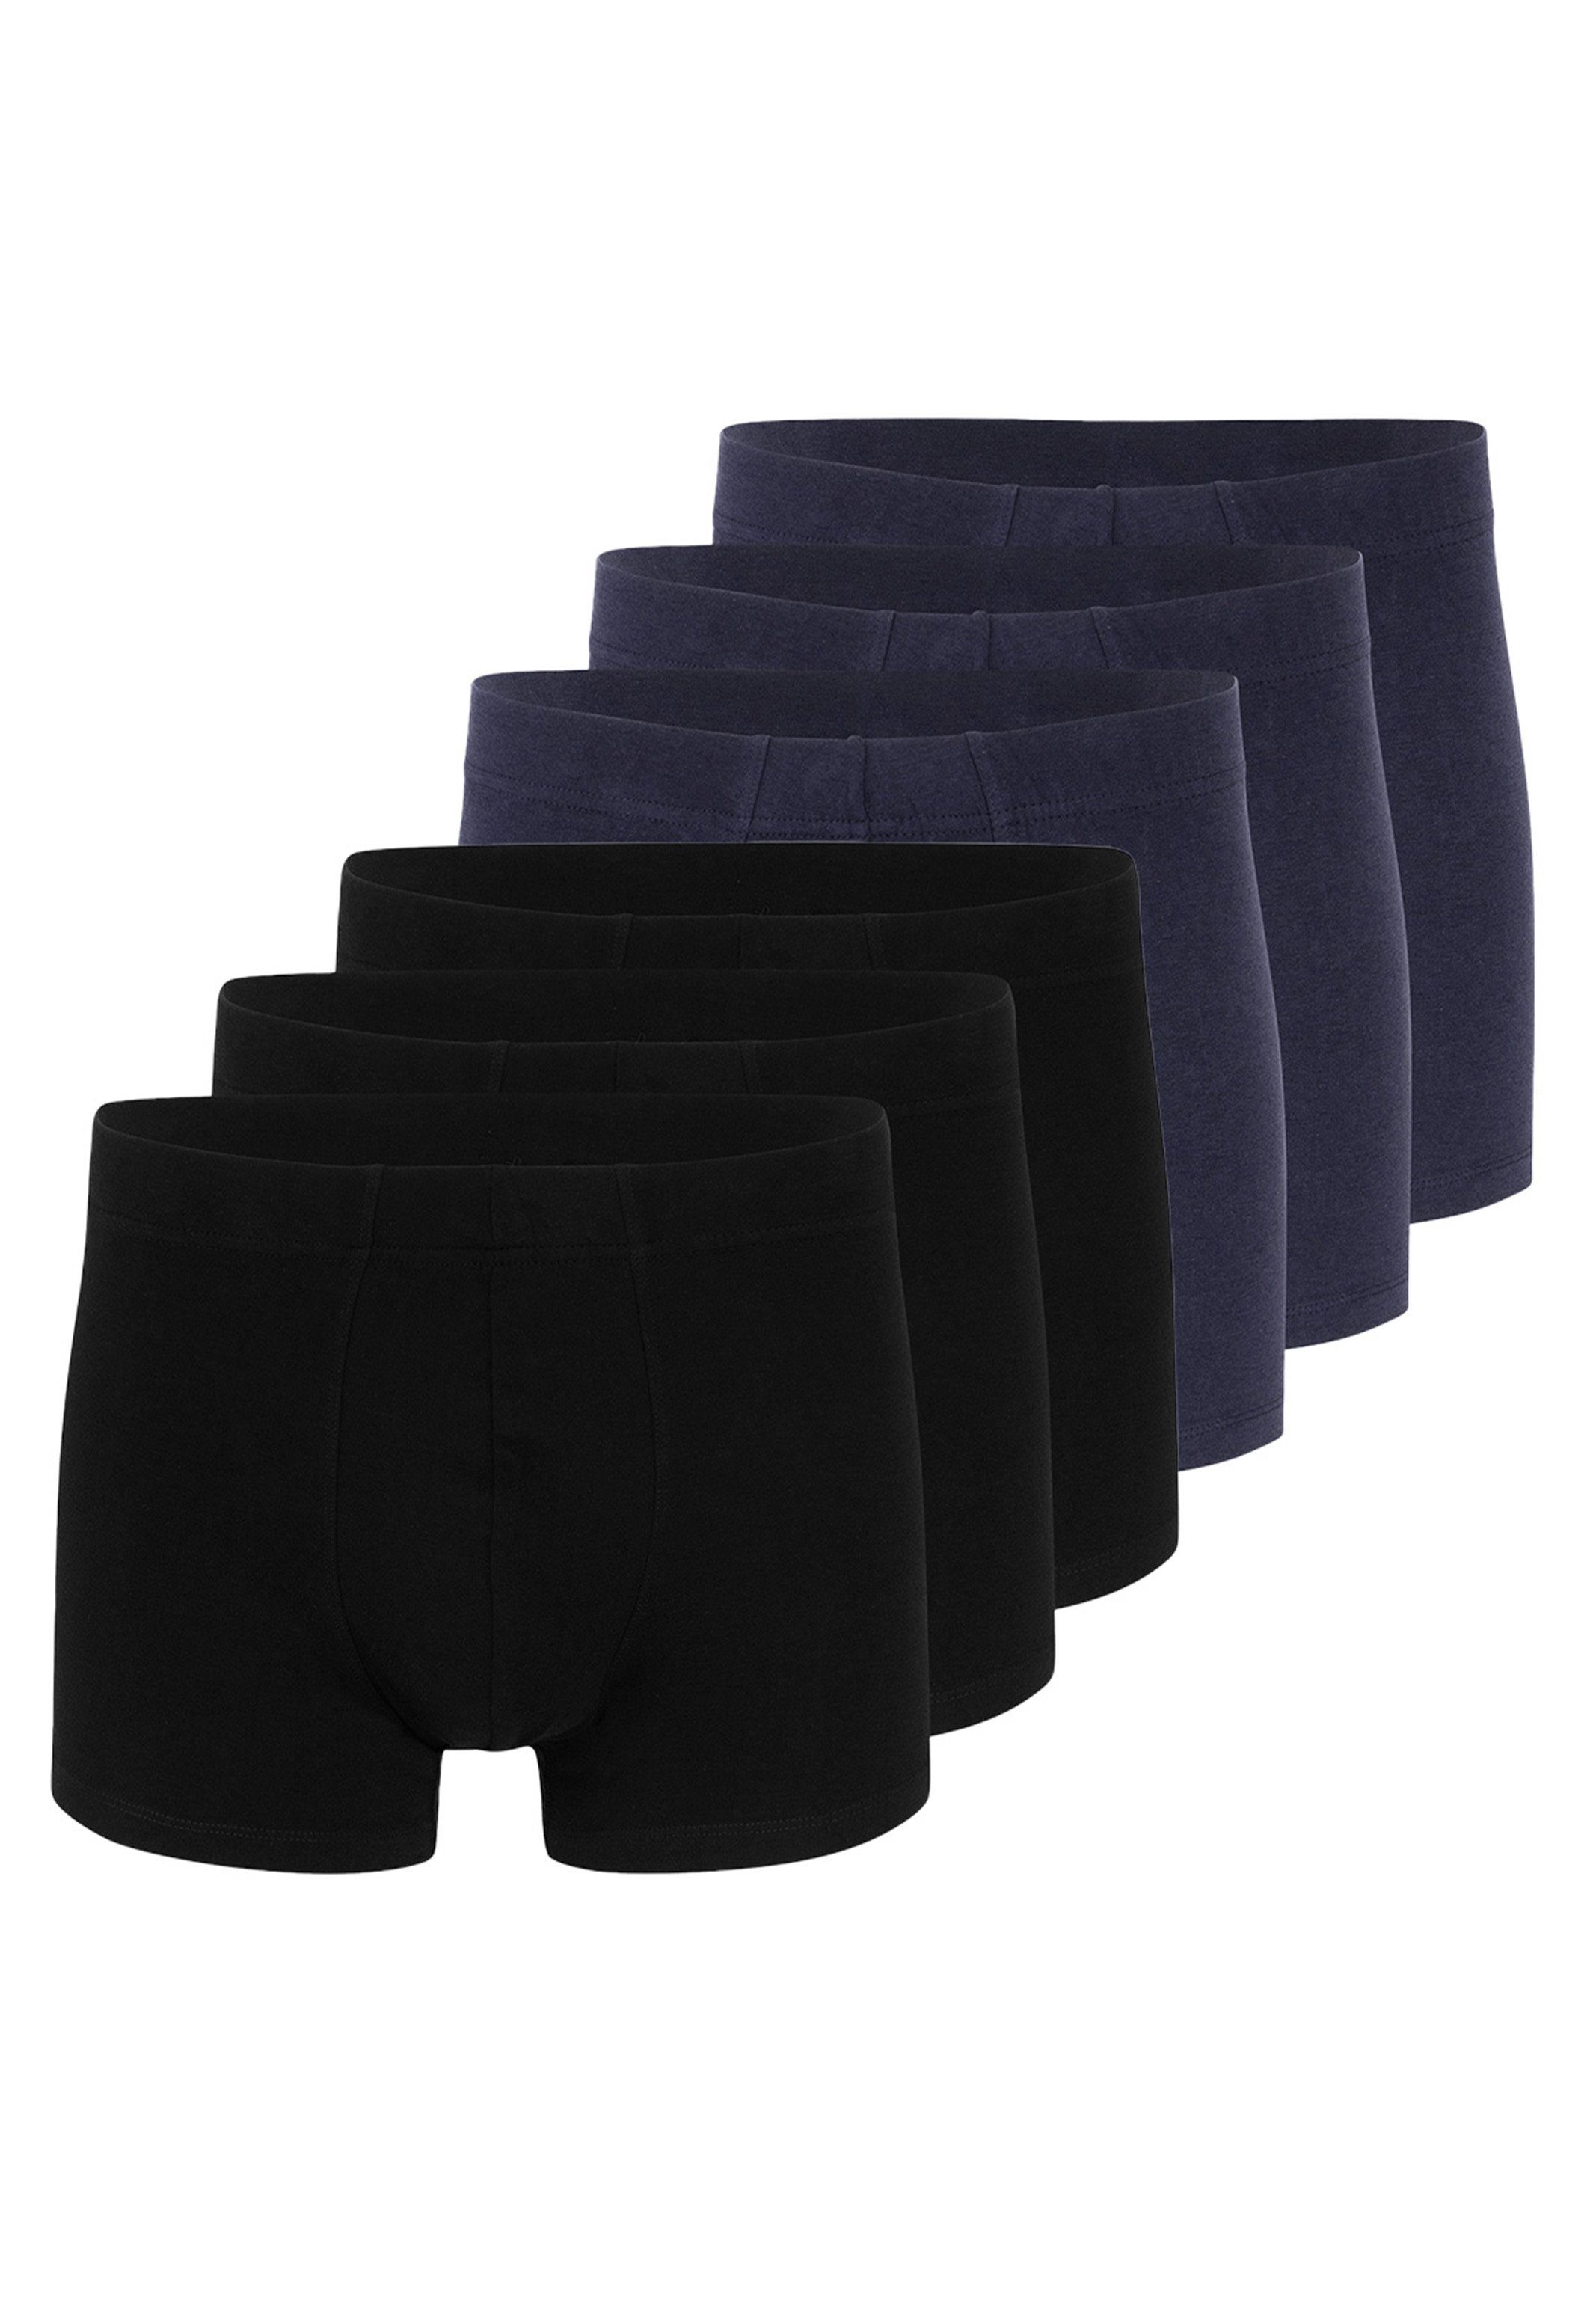 Almonu Retro Boxer 6er Pack Organic Cotton (Spar-Set, 6-St) Retro Short / Pant - Baumwolle - Ohne Eingriff - Atmungsaktiv Schwarz / Navy